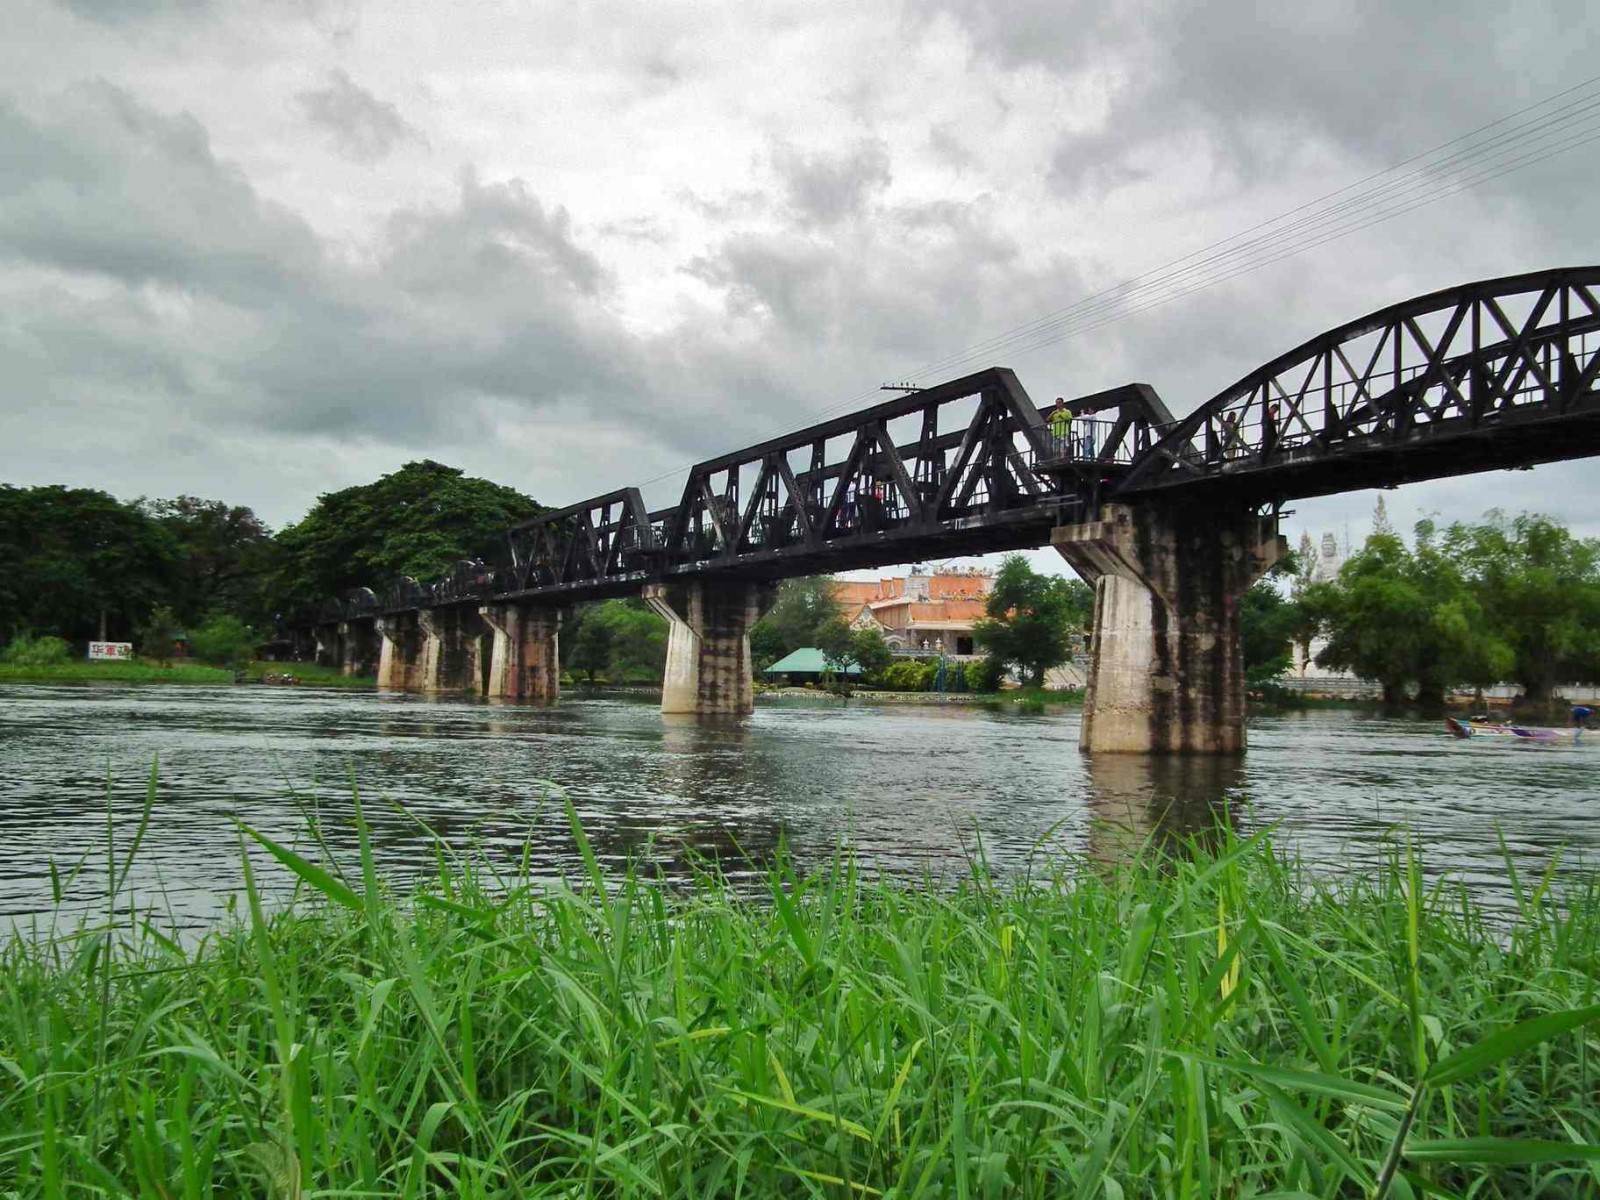 River Kwai Bridge
, Architecture | History | Bridge | Water | Thailand